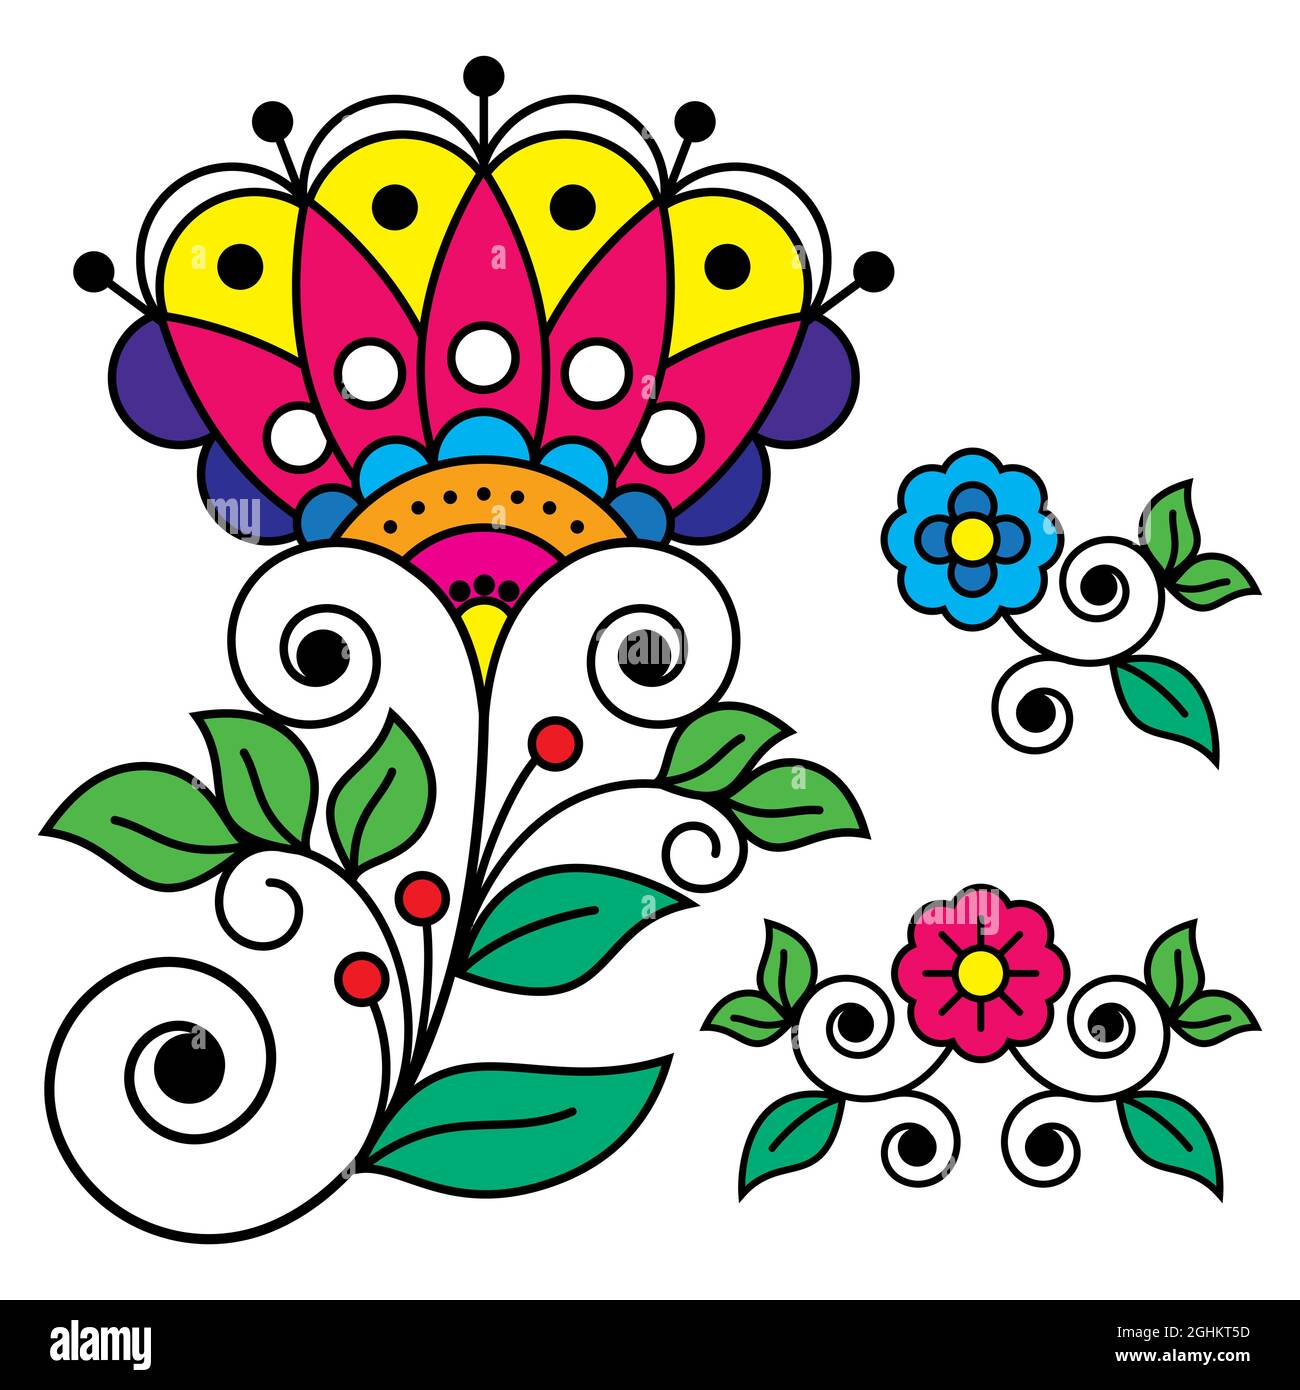 Scandinavian folk art flower vector design set, retro floral patterns inspired by the traditional art from Sweden Stock Vector